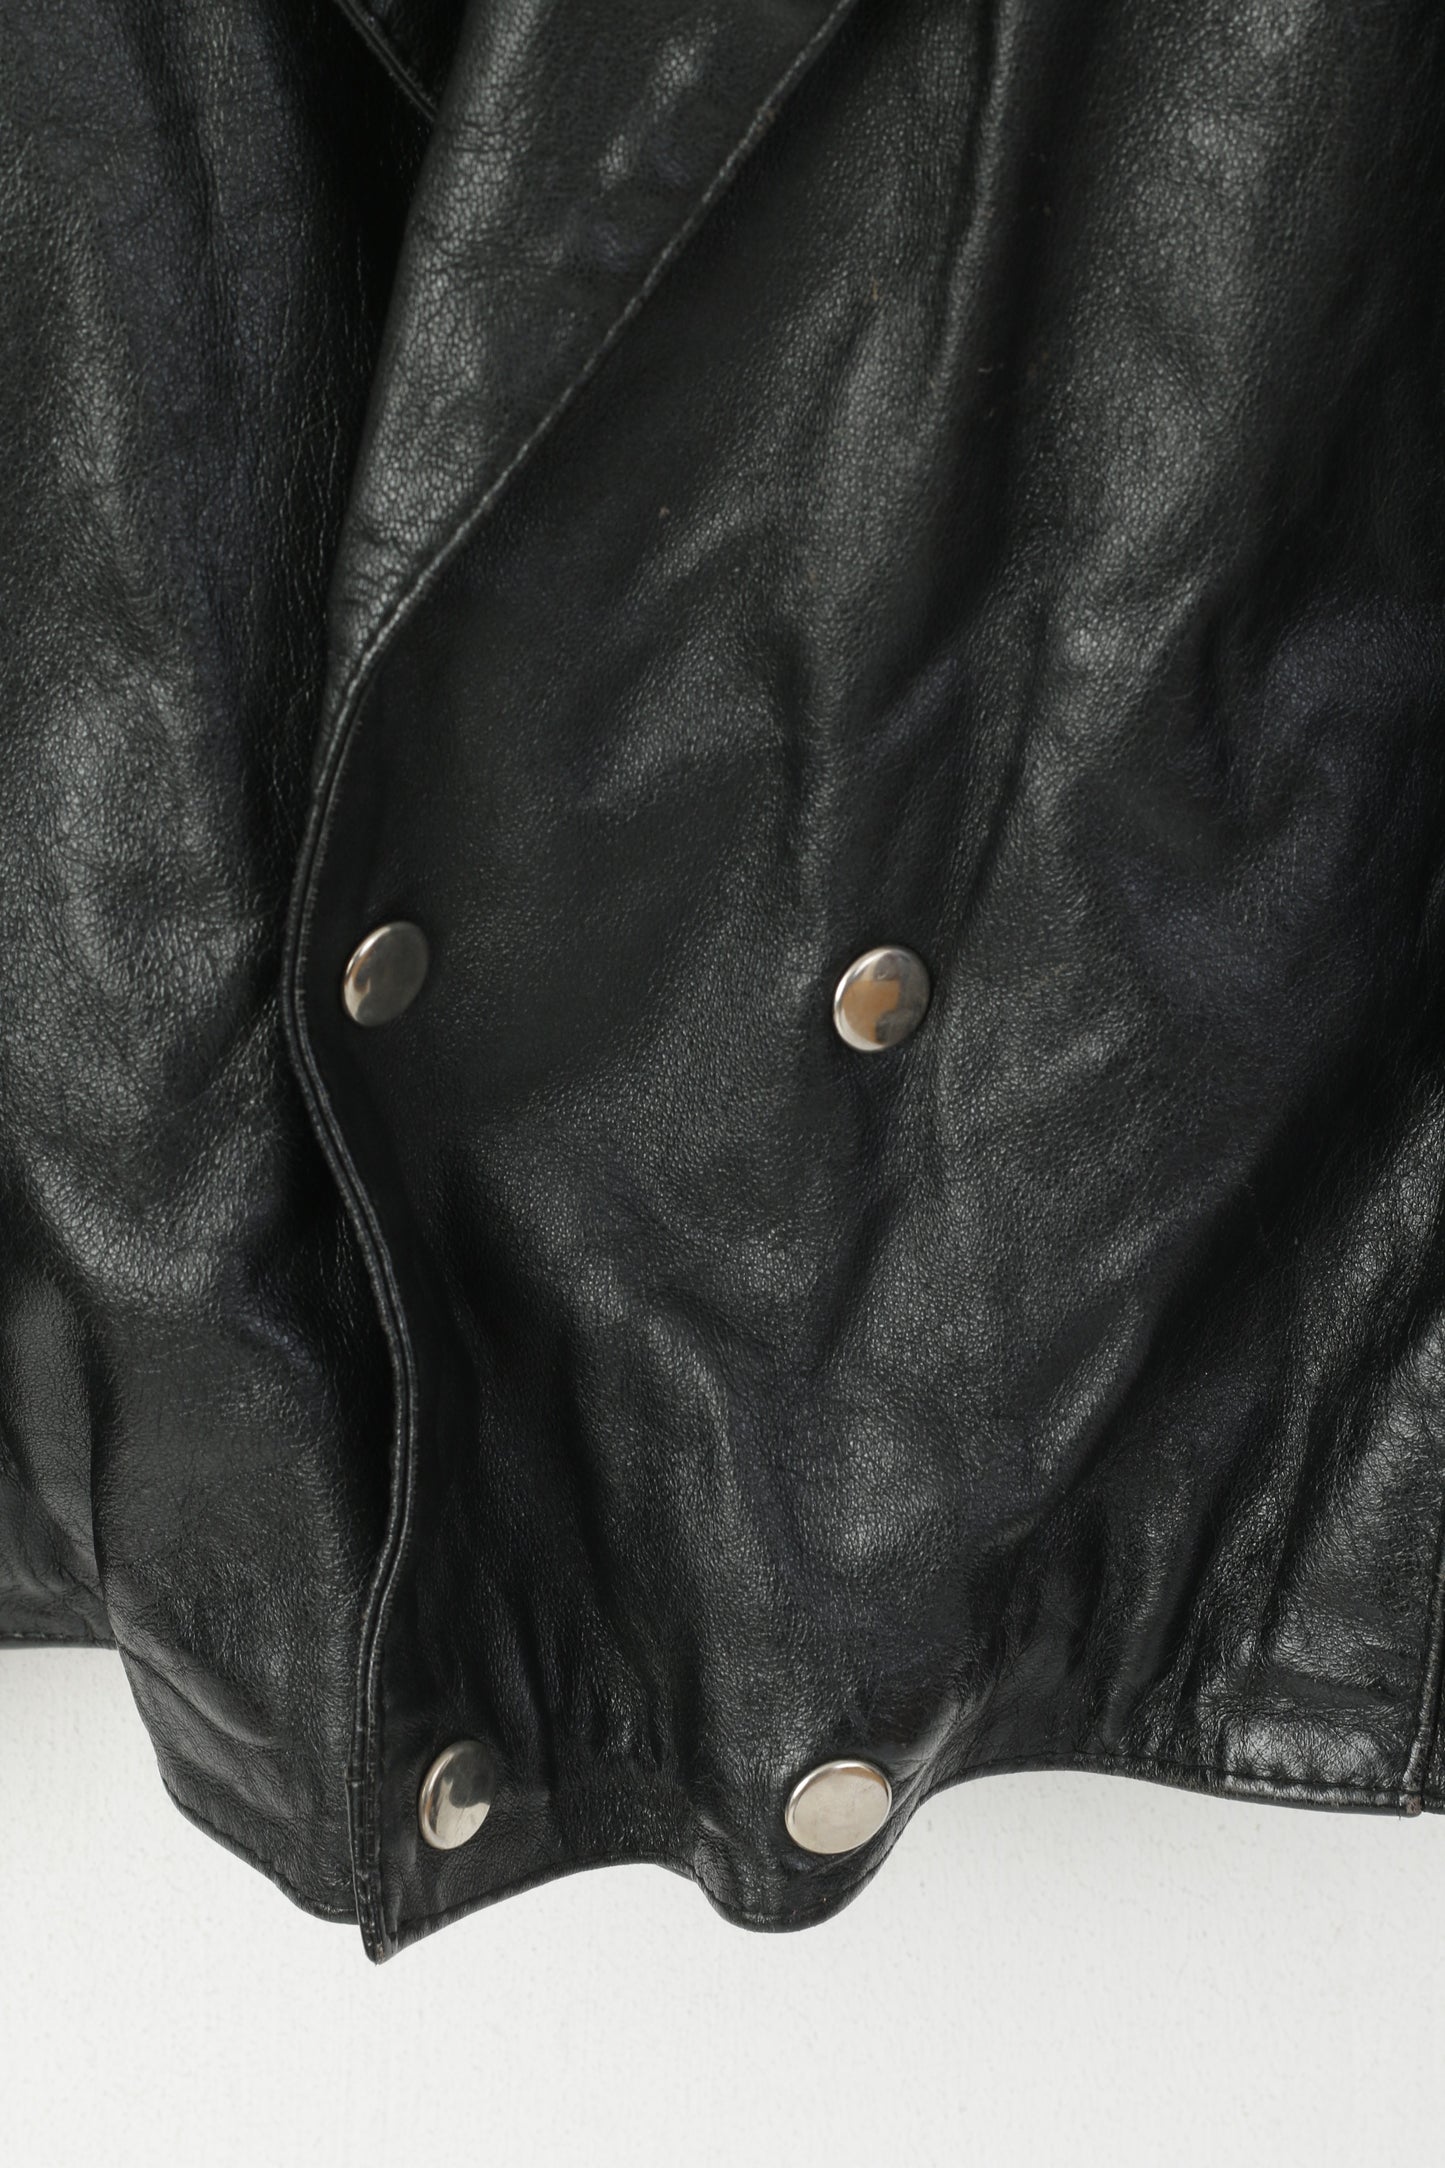 Stephano Women XL Jacket Black Leather Bomber Padded Western Vintage 90s Top